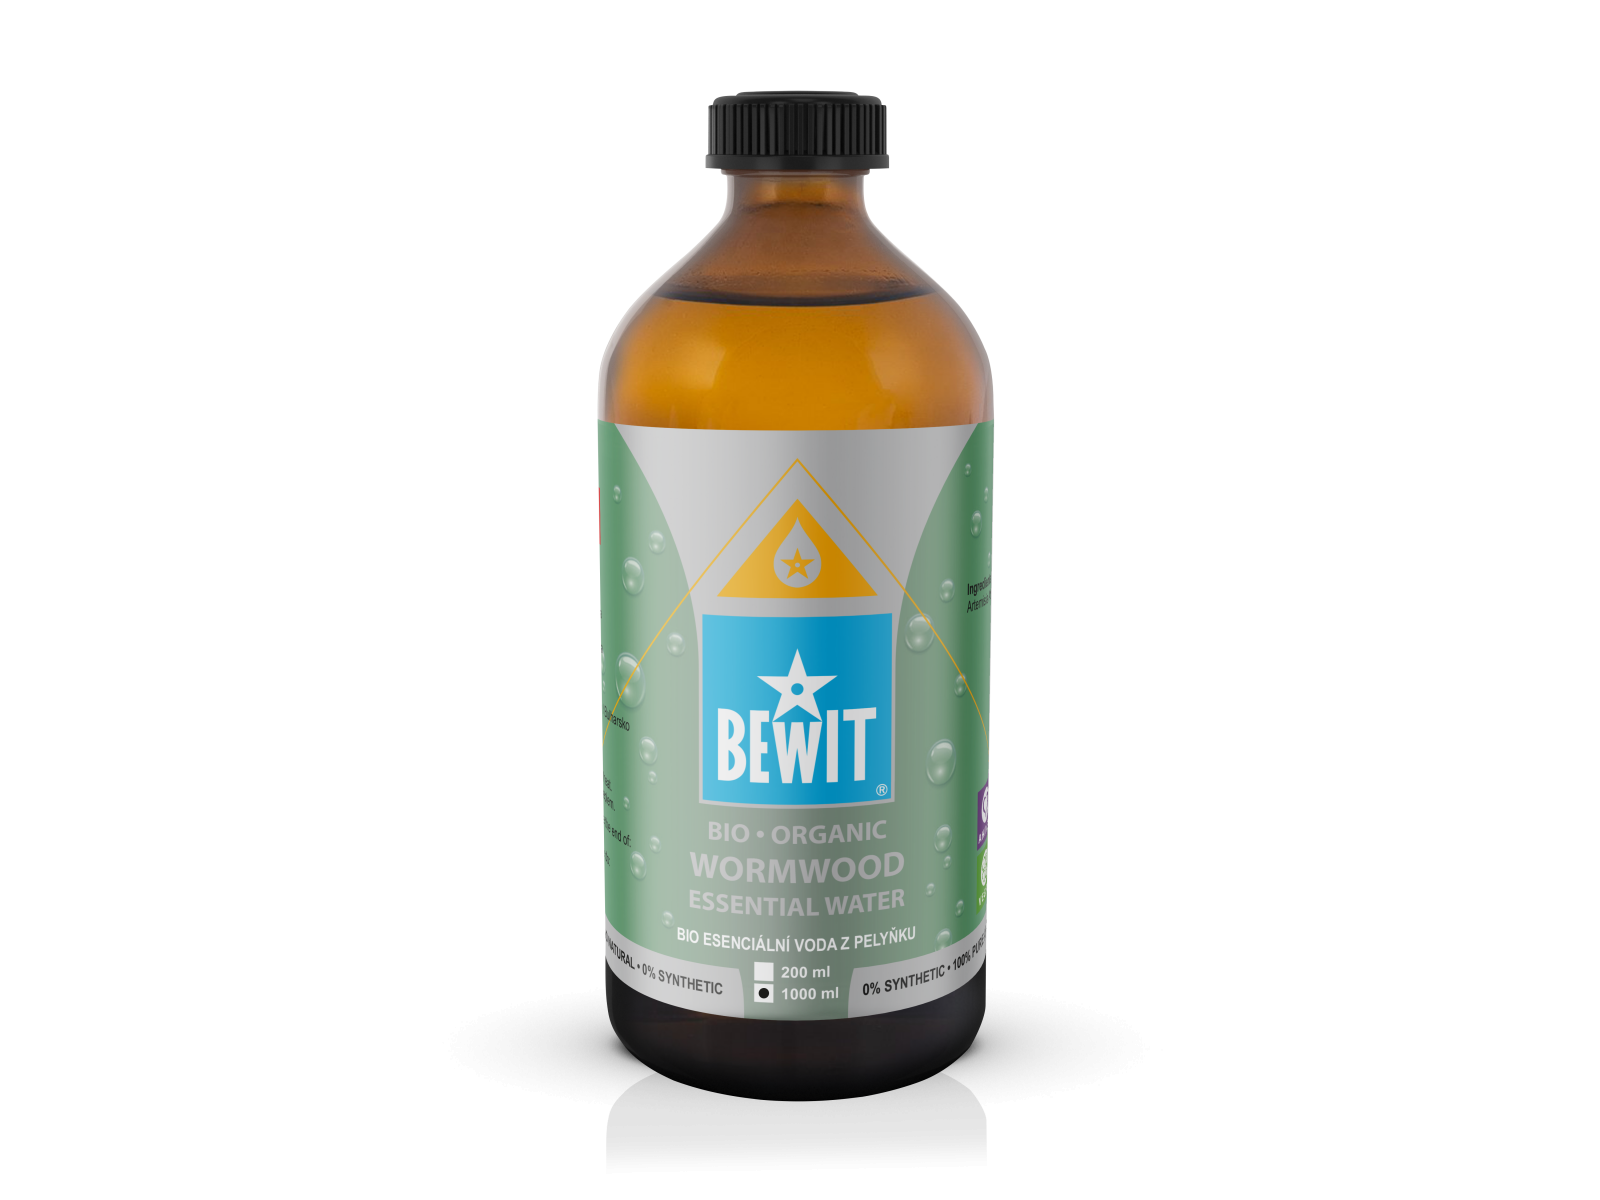 BEWIT Wormwood essential water BIO - 100% NATURAL HYDROLYTE - 3